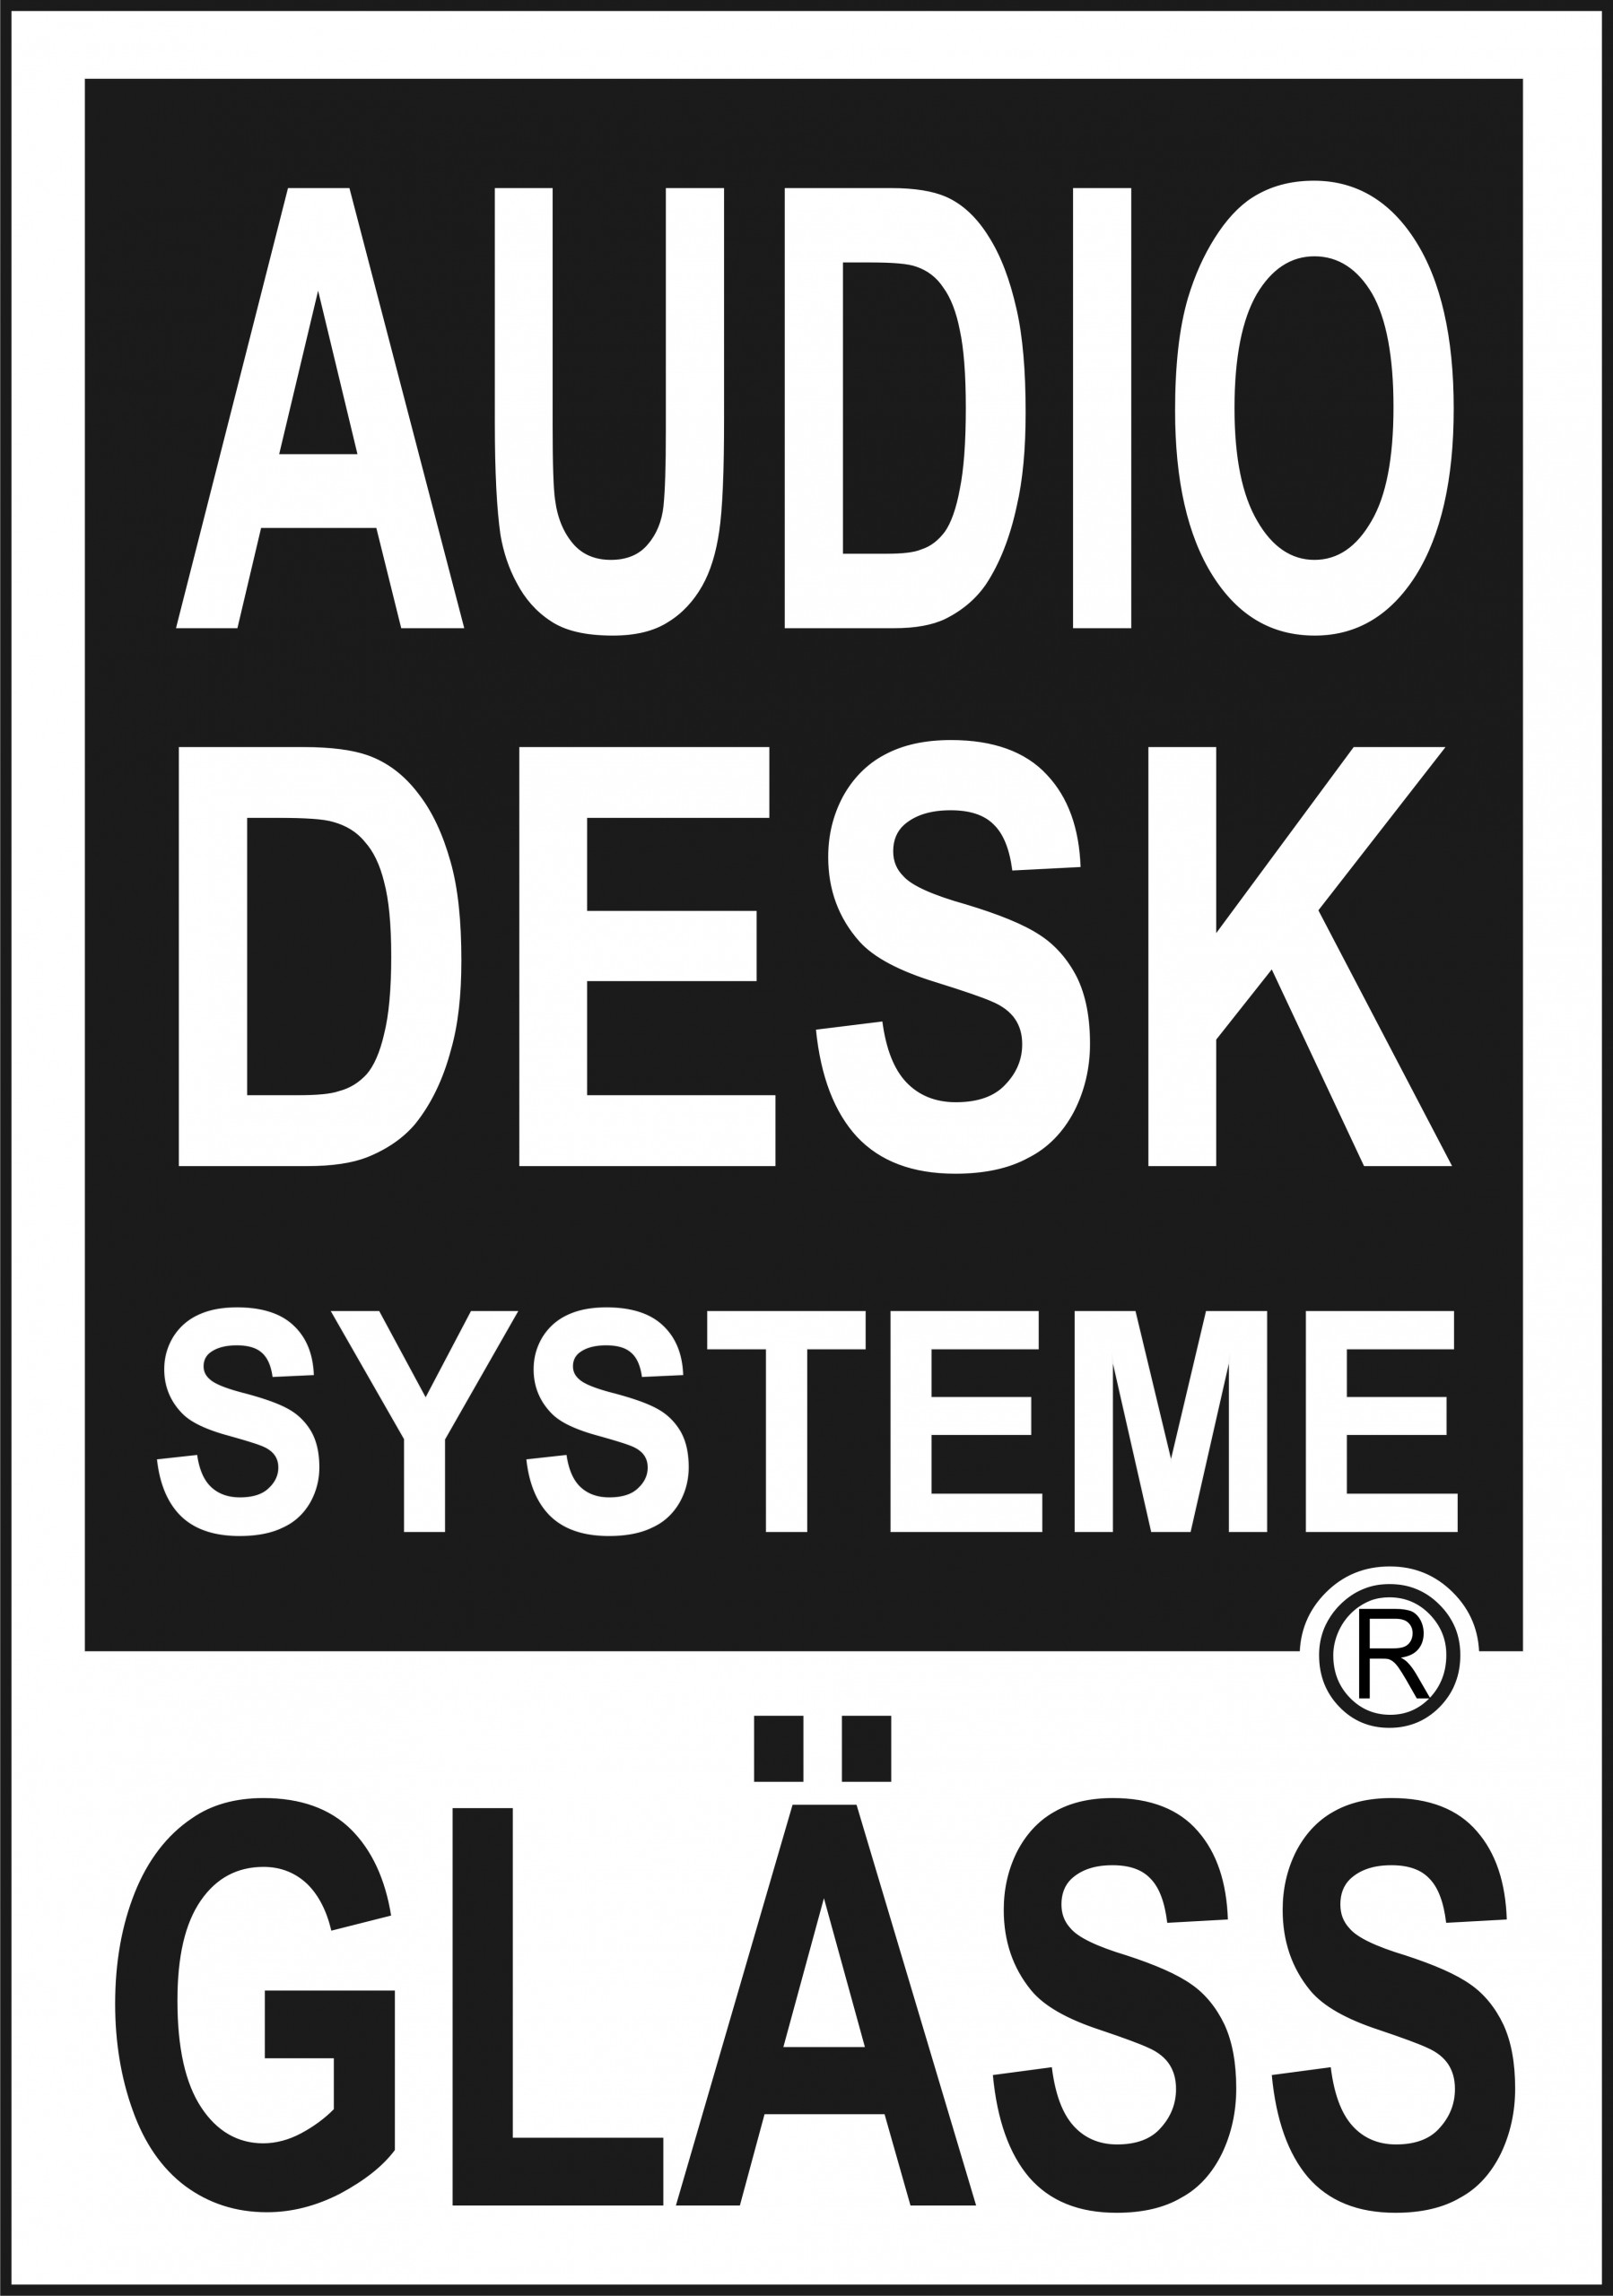 Audiodesk Systeme Gläss GmbH